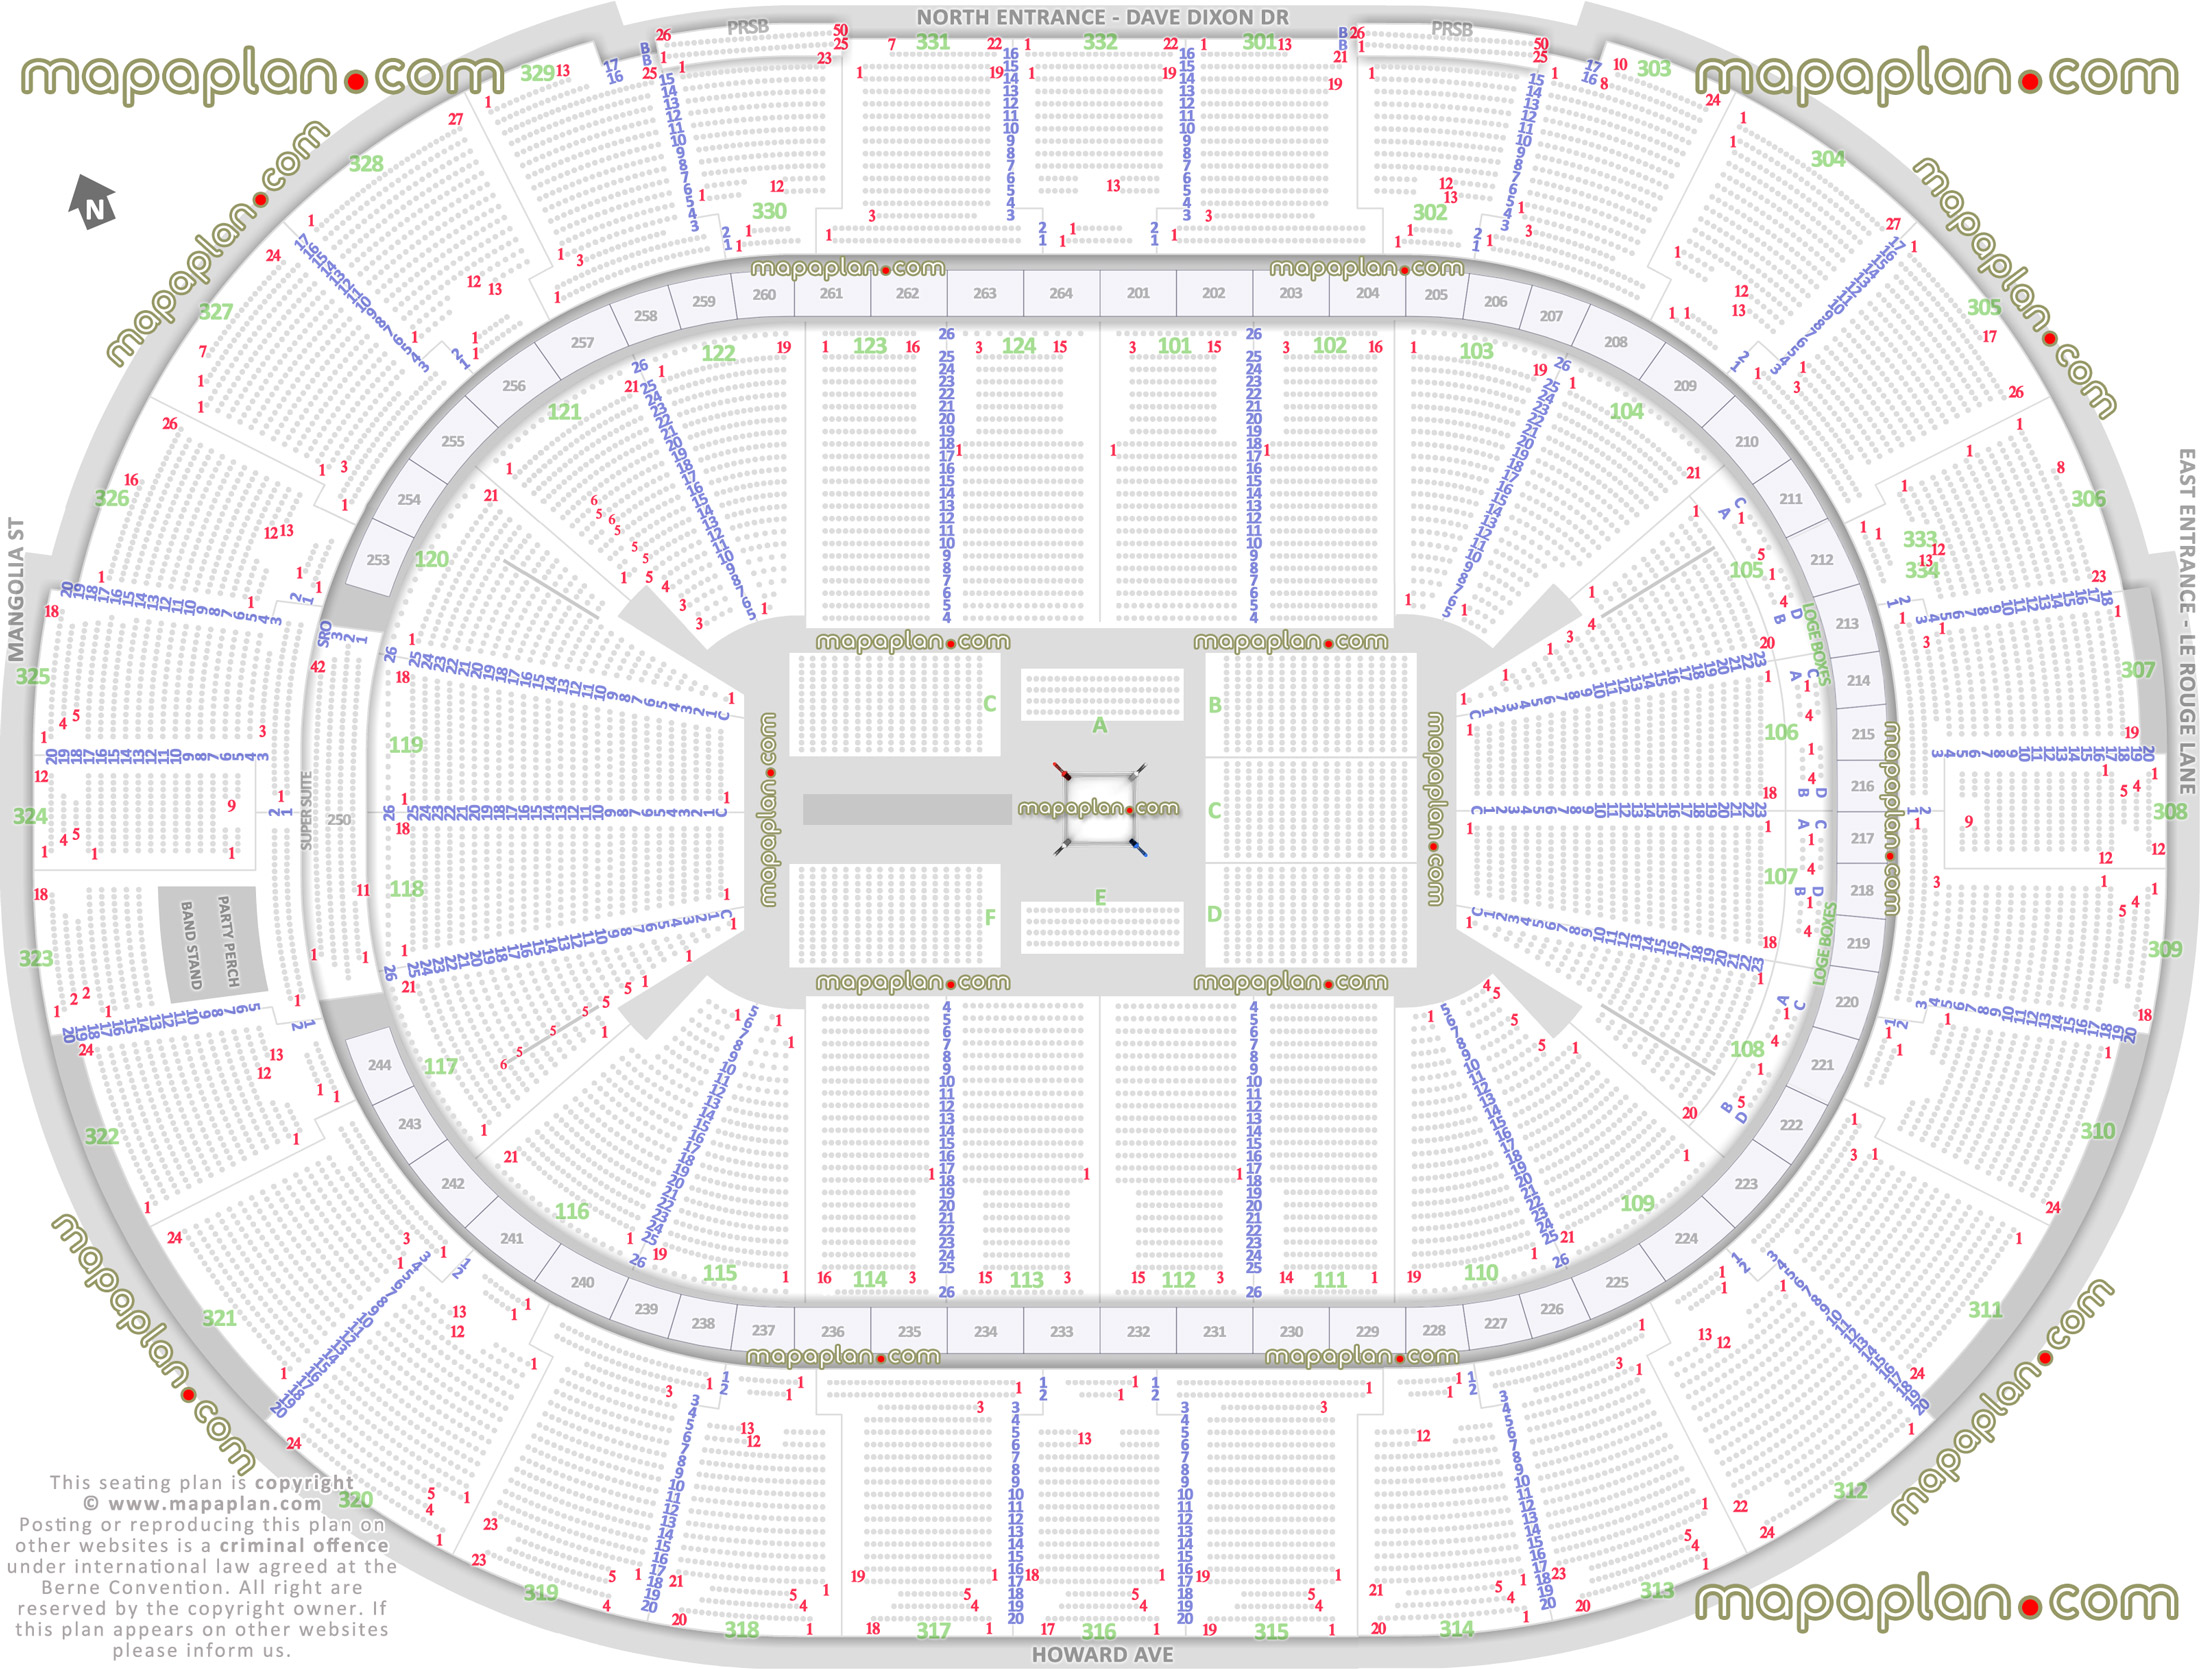 Nassau Coliseum Wwe Raw Seating Chart